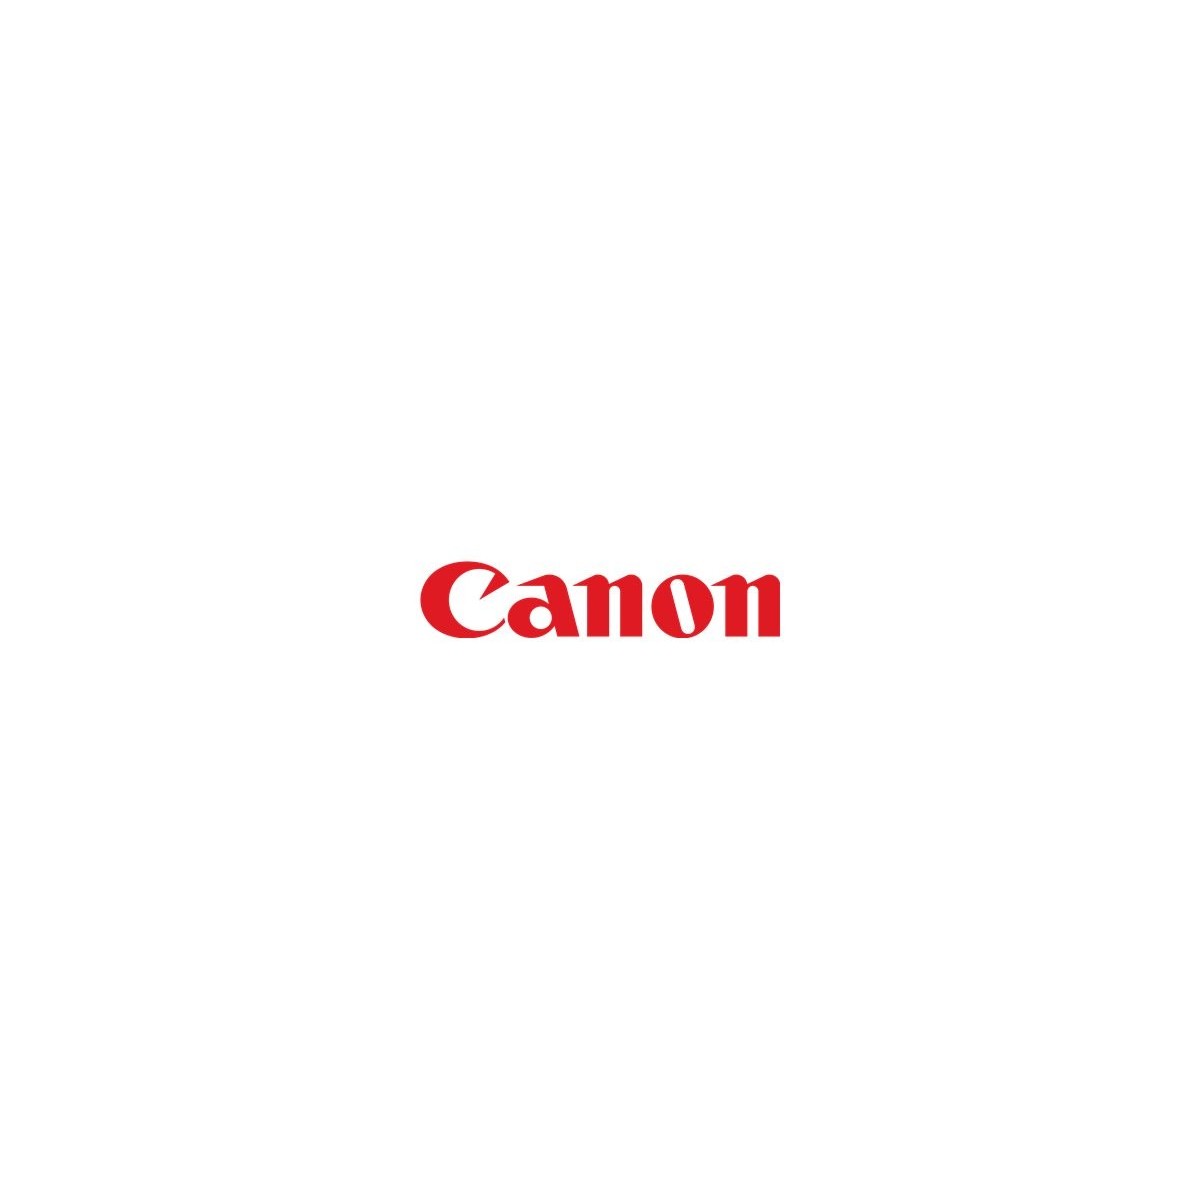 Canon AB1 - Canon iRC1021i - 500 sheets